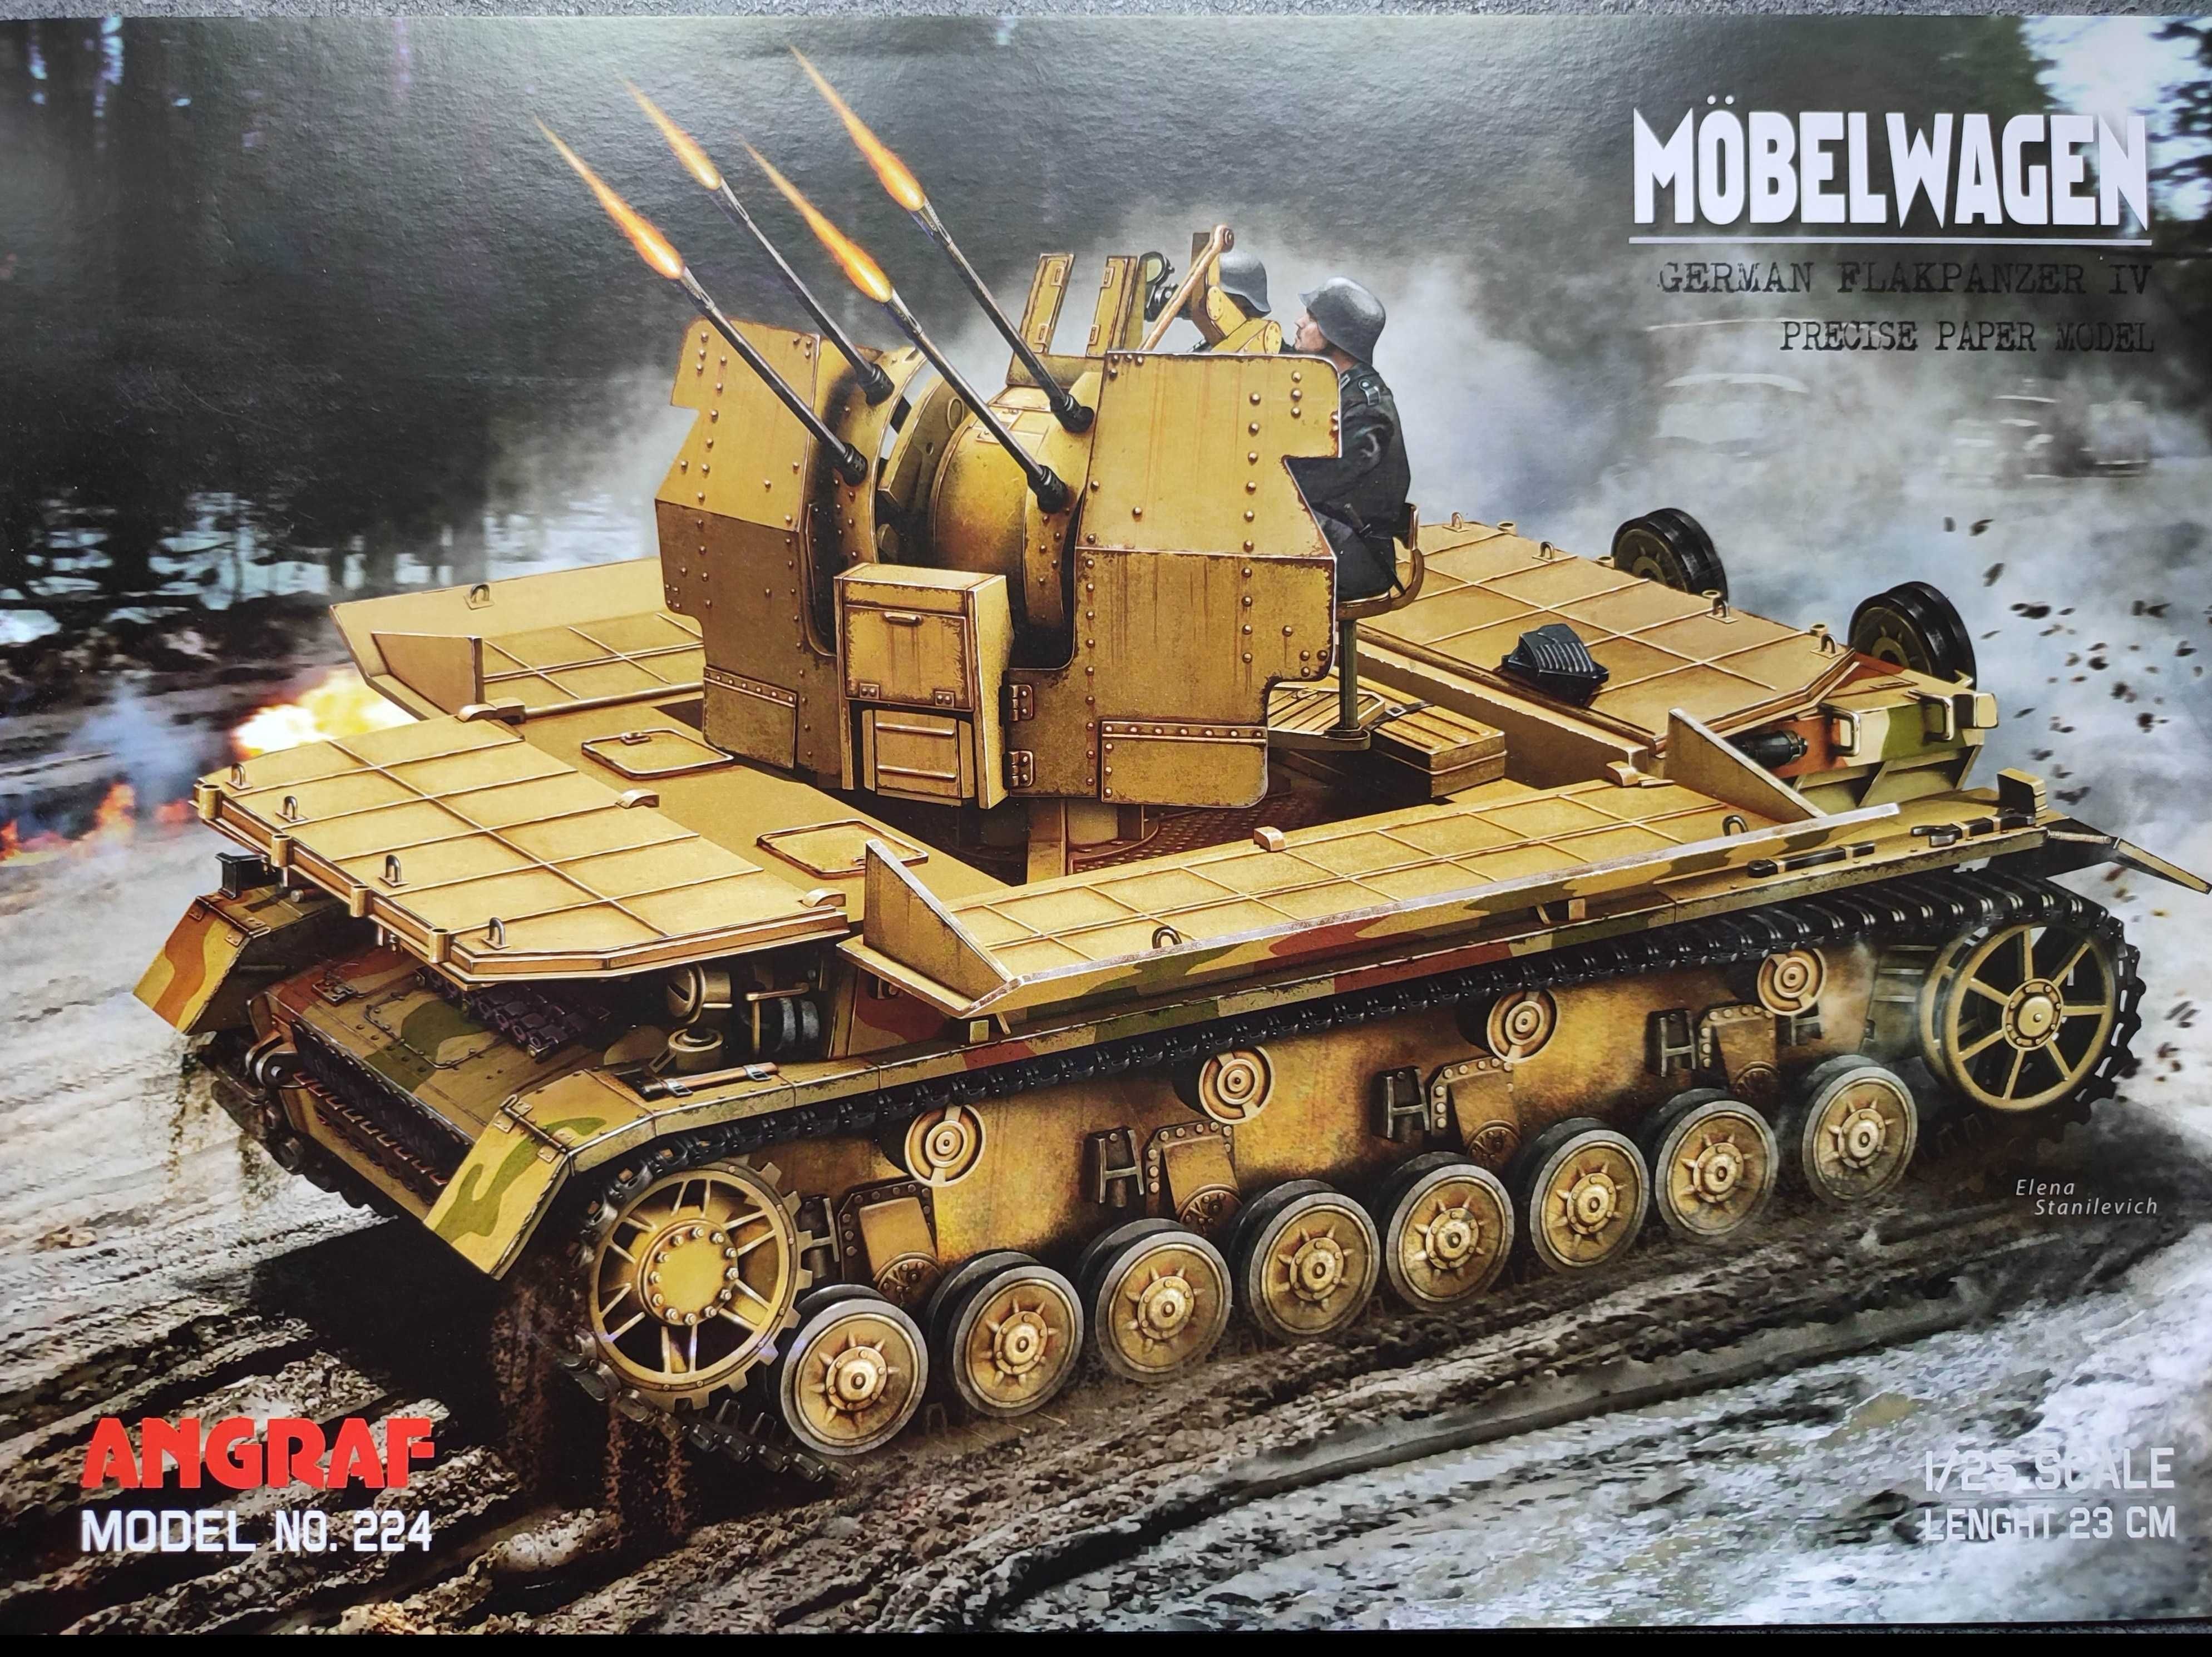 Model kartonowy Angraf224 : Flakpanzer IV Mobelwagen